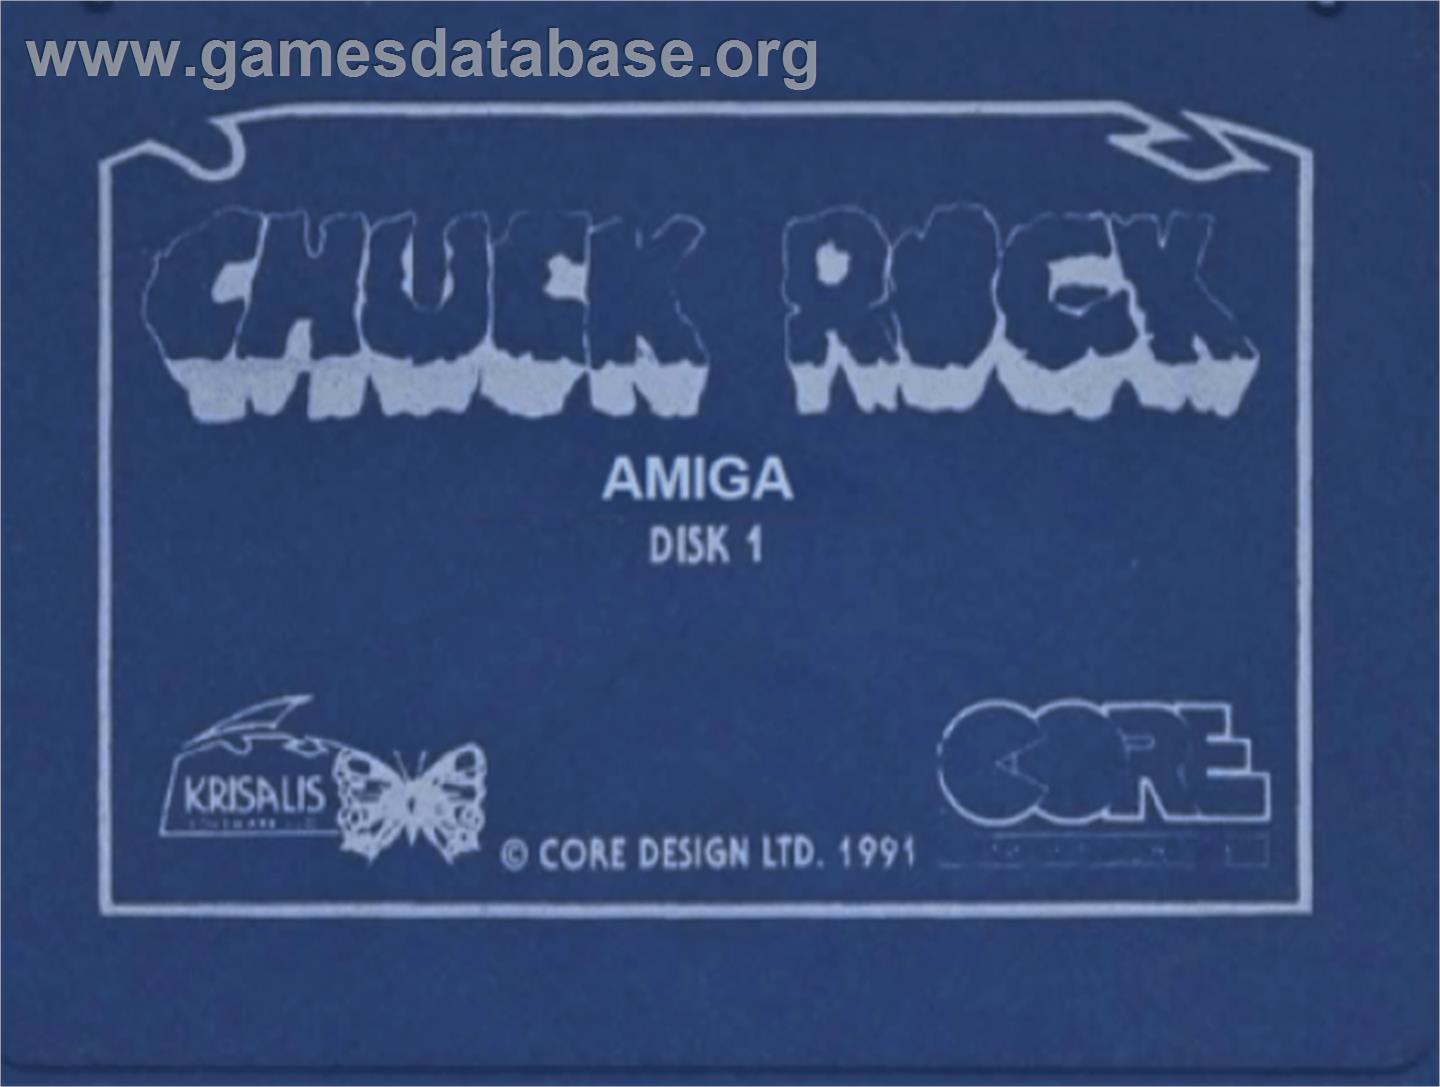 Chuck Rock - Commodore Amiga - Artwork - Cartridge Top